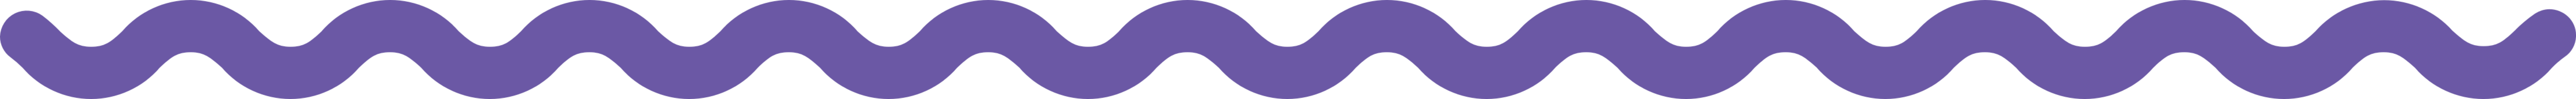 Minderful_Wave_long_purple